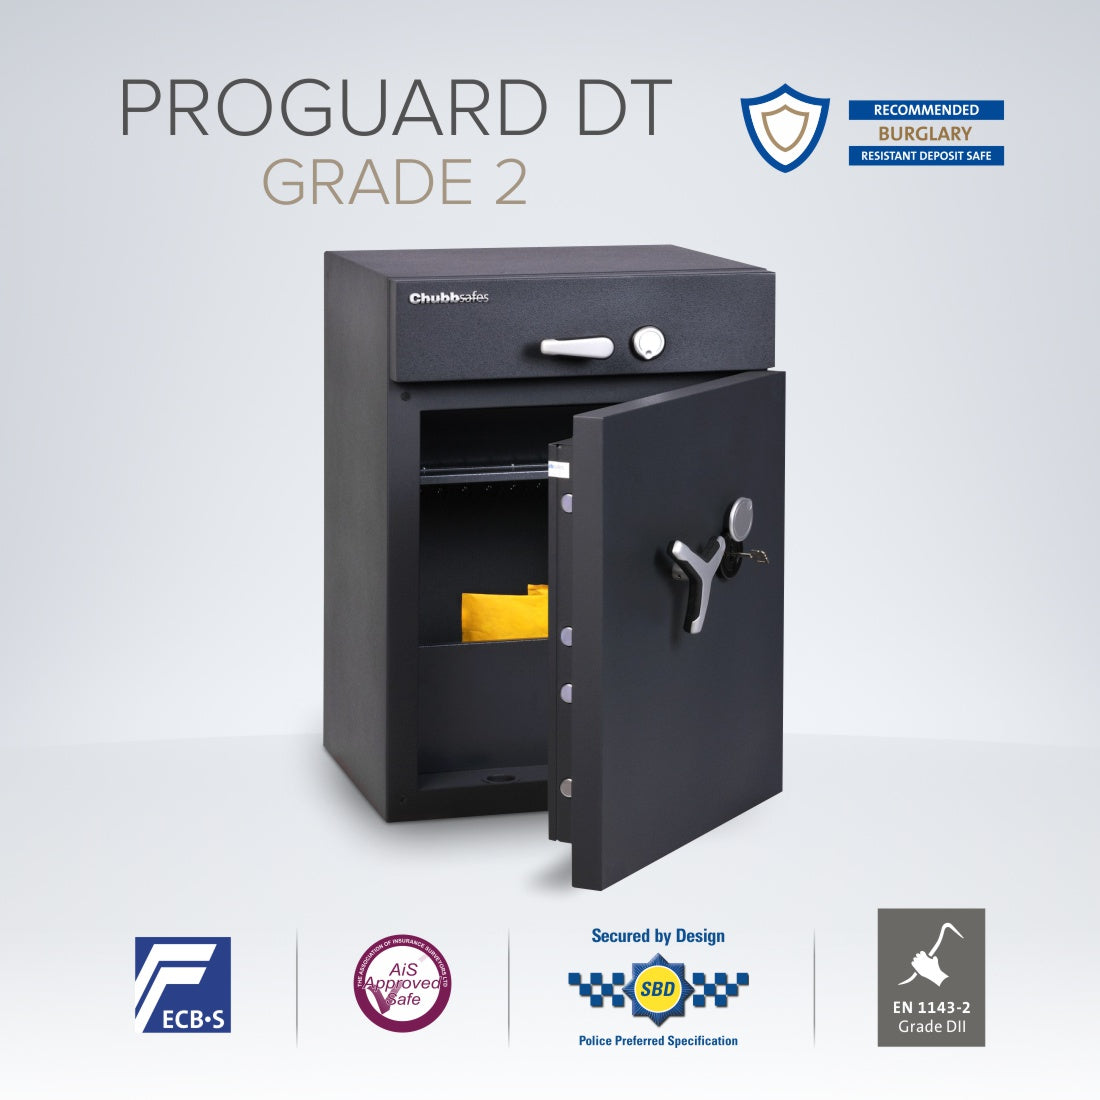 Chubbsafes ProGuard DT Grade 2 Deposit Safe Size 110K KEY LOCK